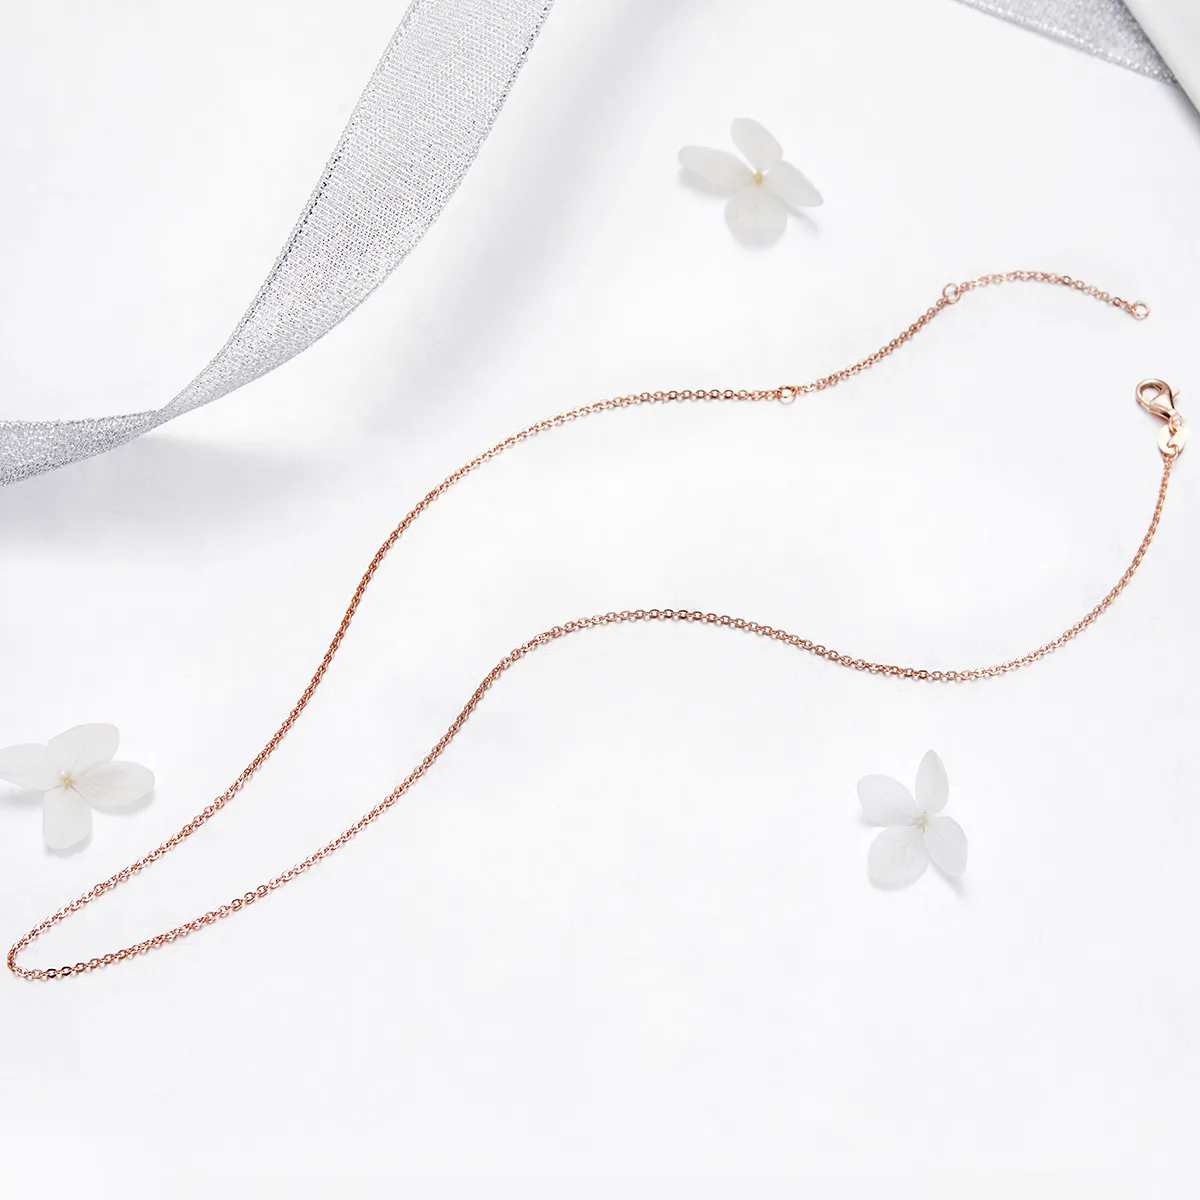 Pandora Style Rose Gold Necklace - SCA014-45